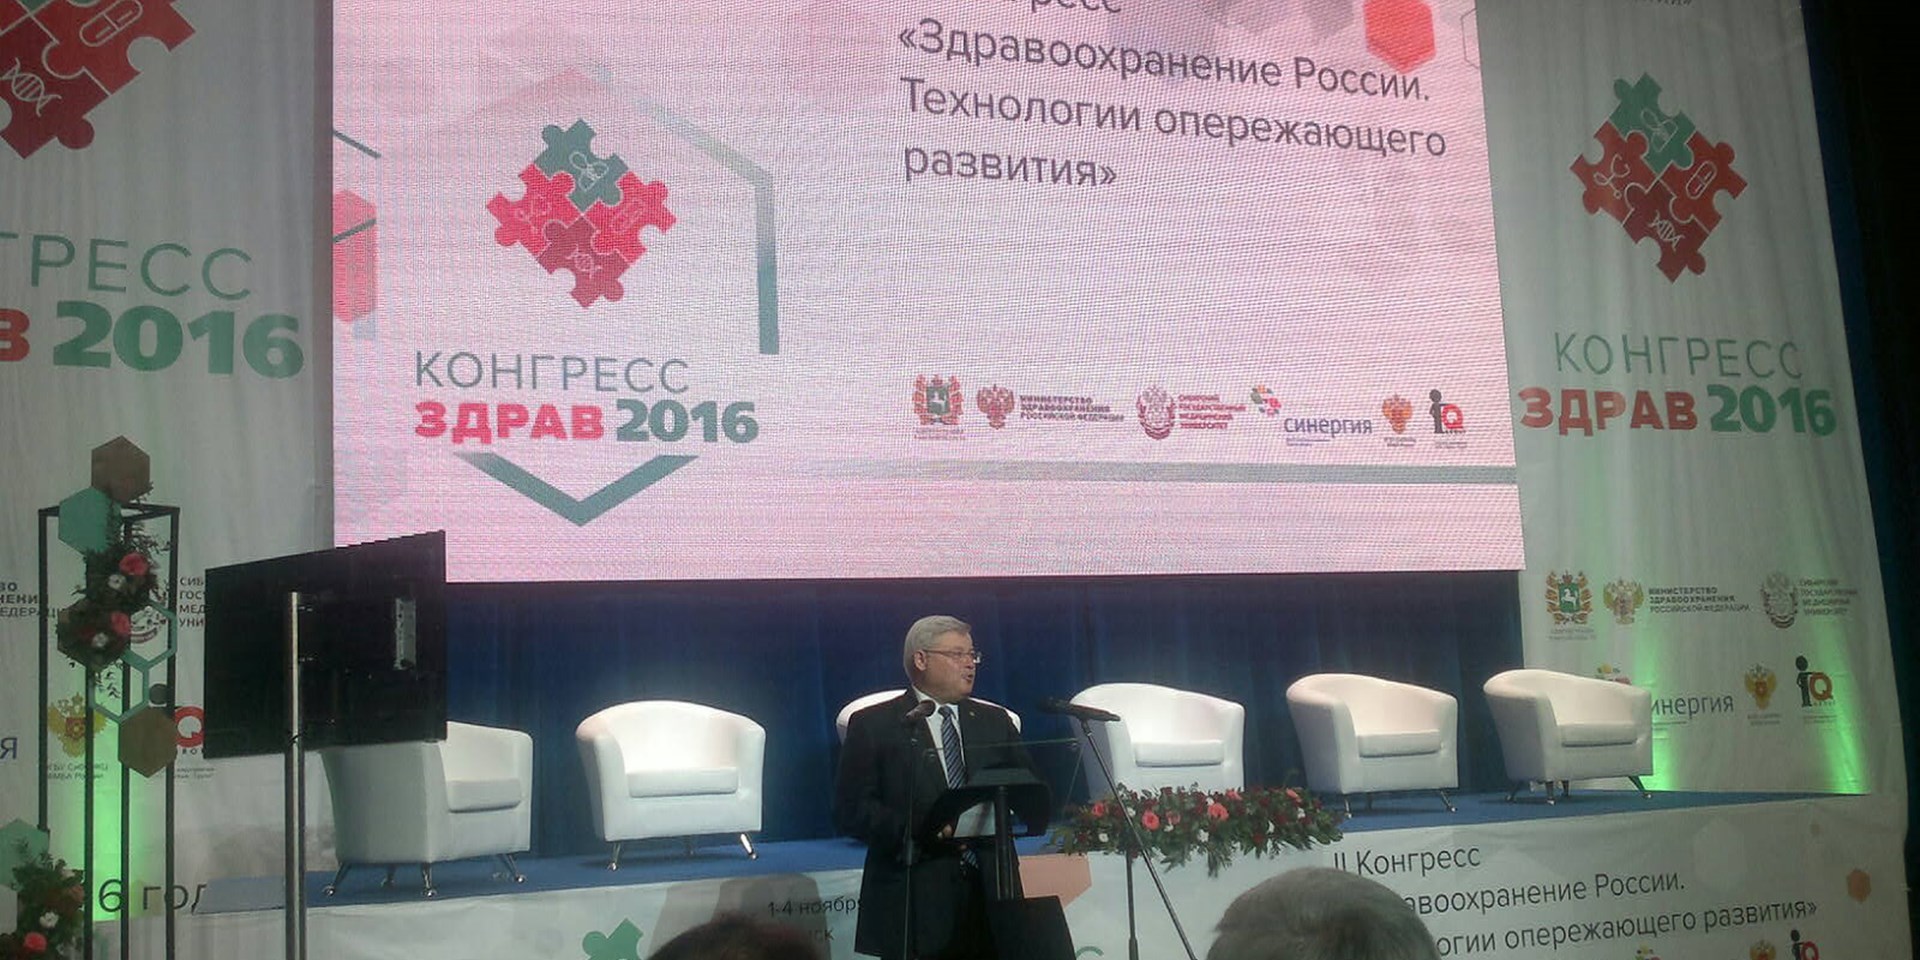 Конгресс «ЗДРАВ2016» в Томске 